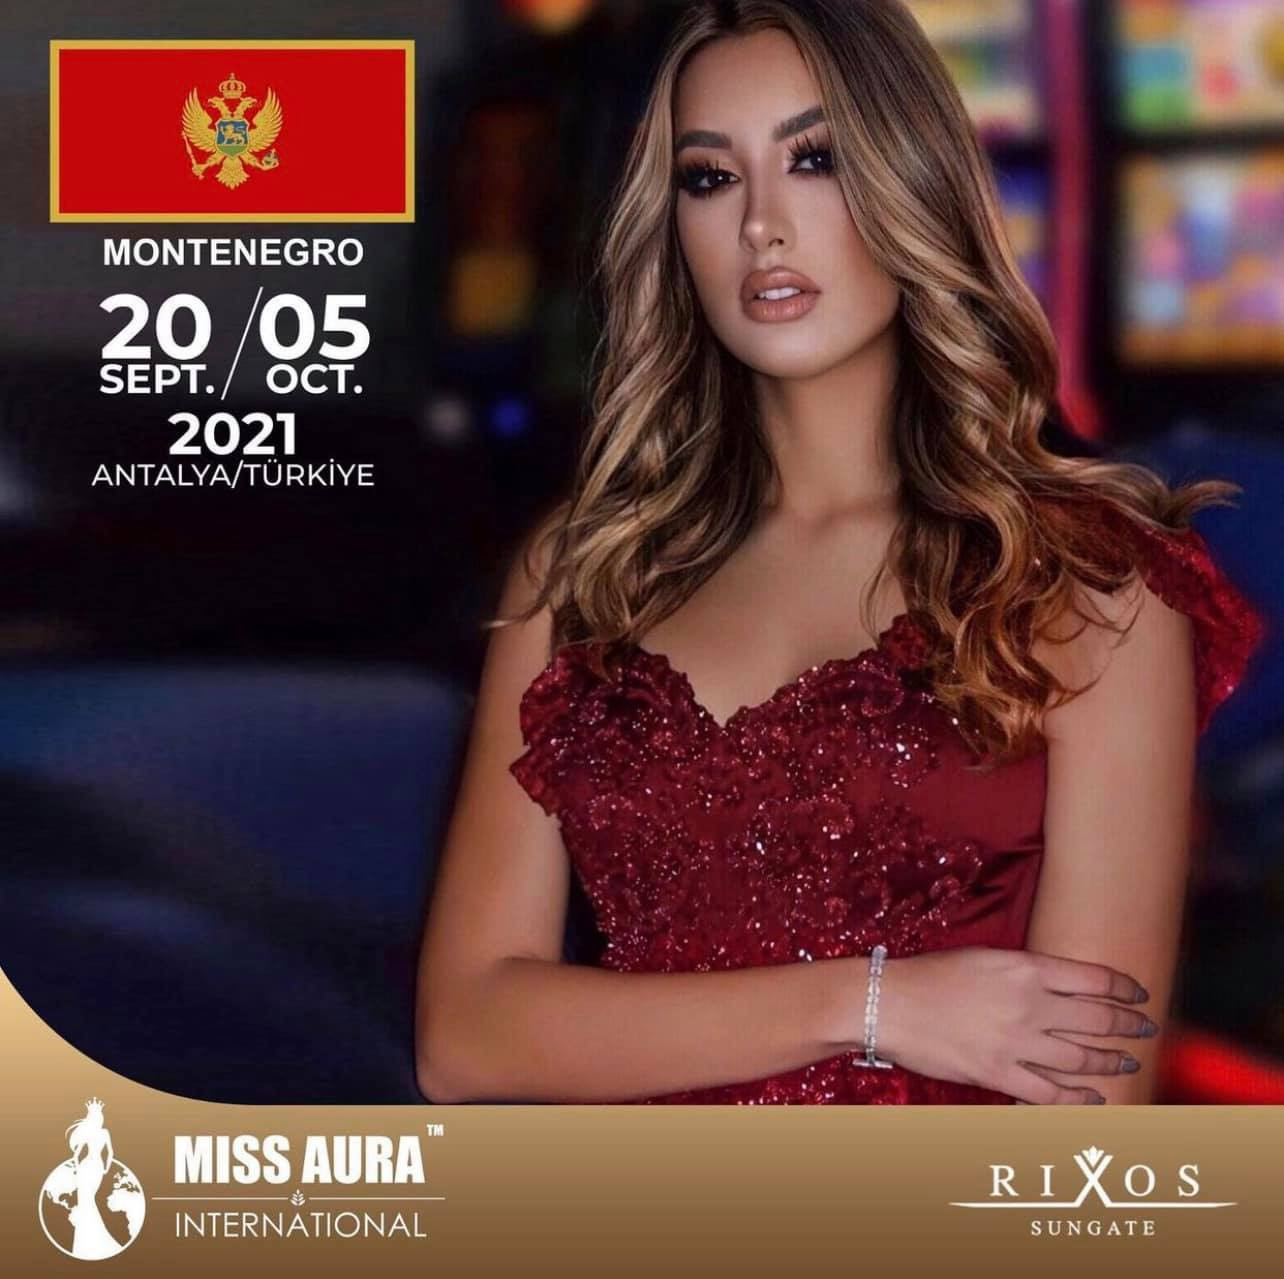 philippines vence miss aura international 2021. - Página 2 RPrhqg